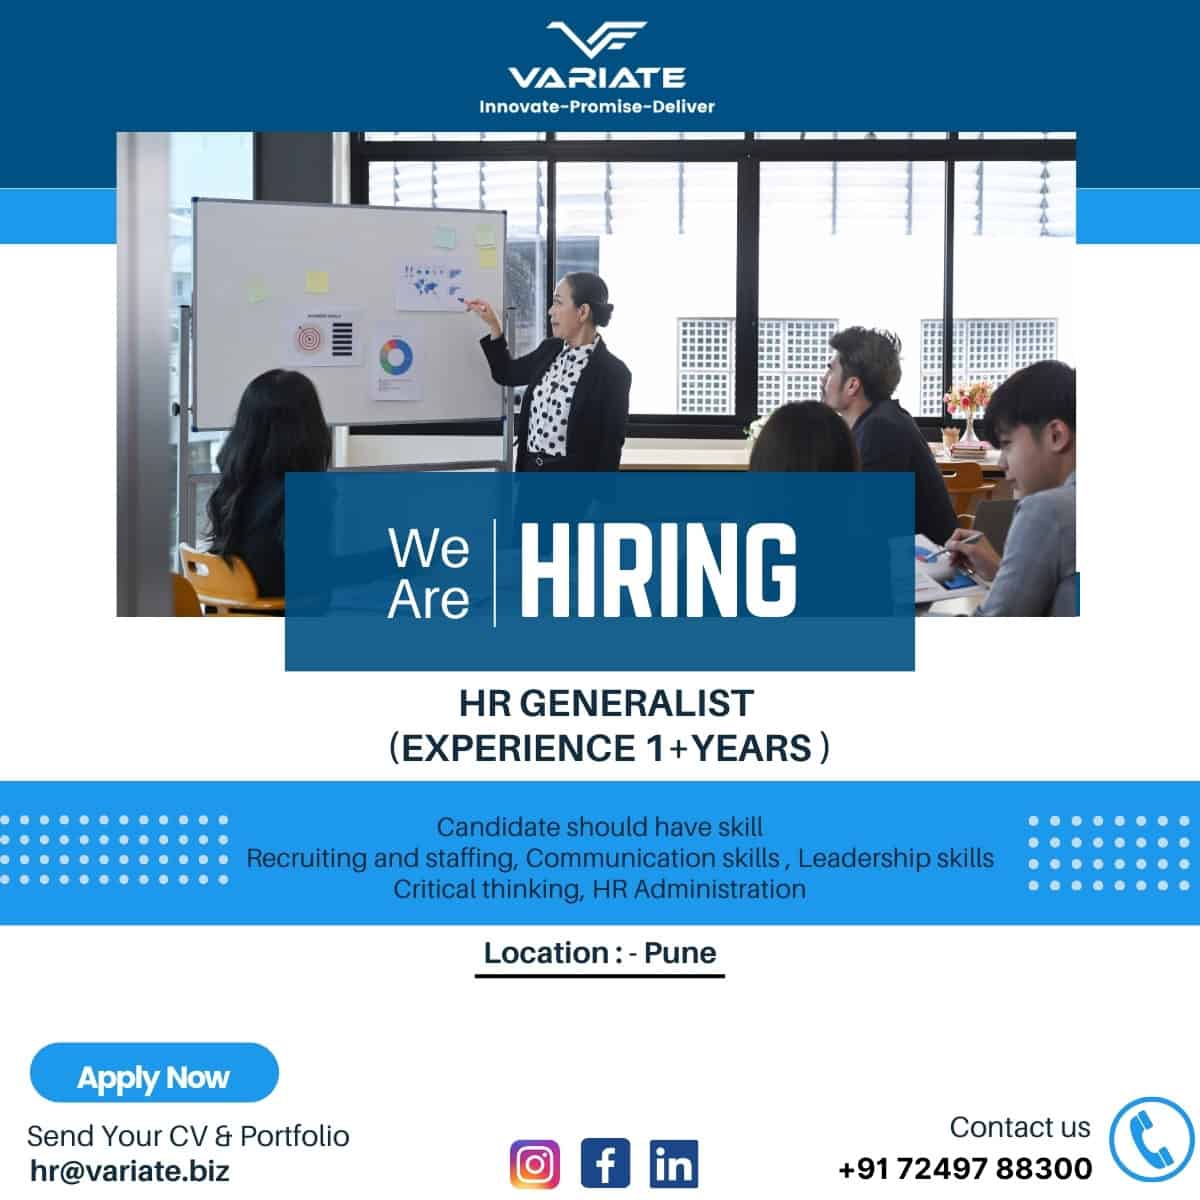 hiring image for human resource generalist job